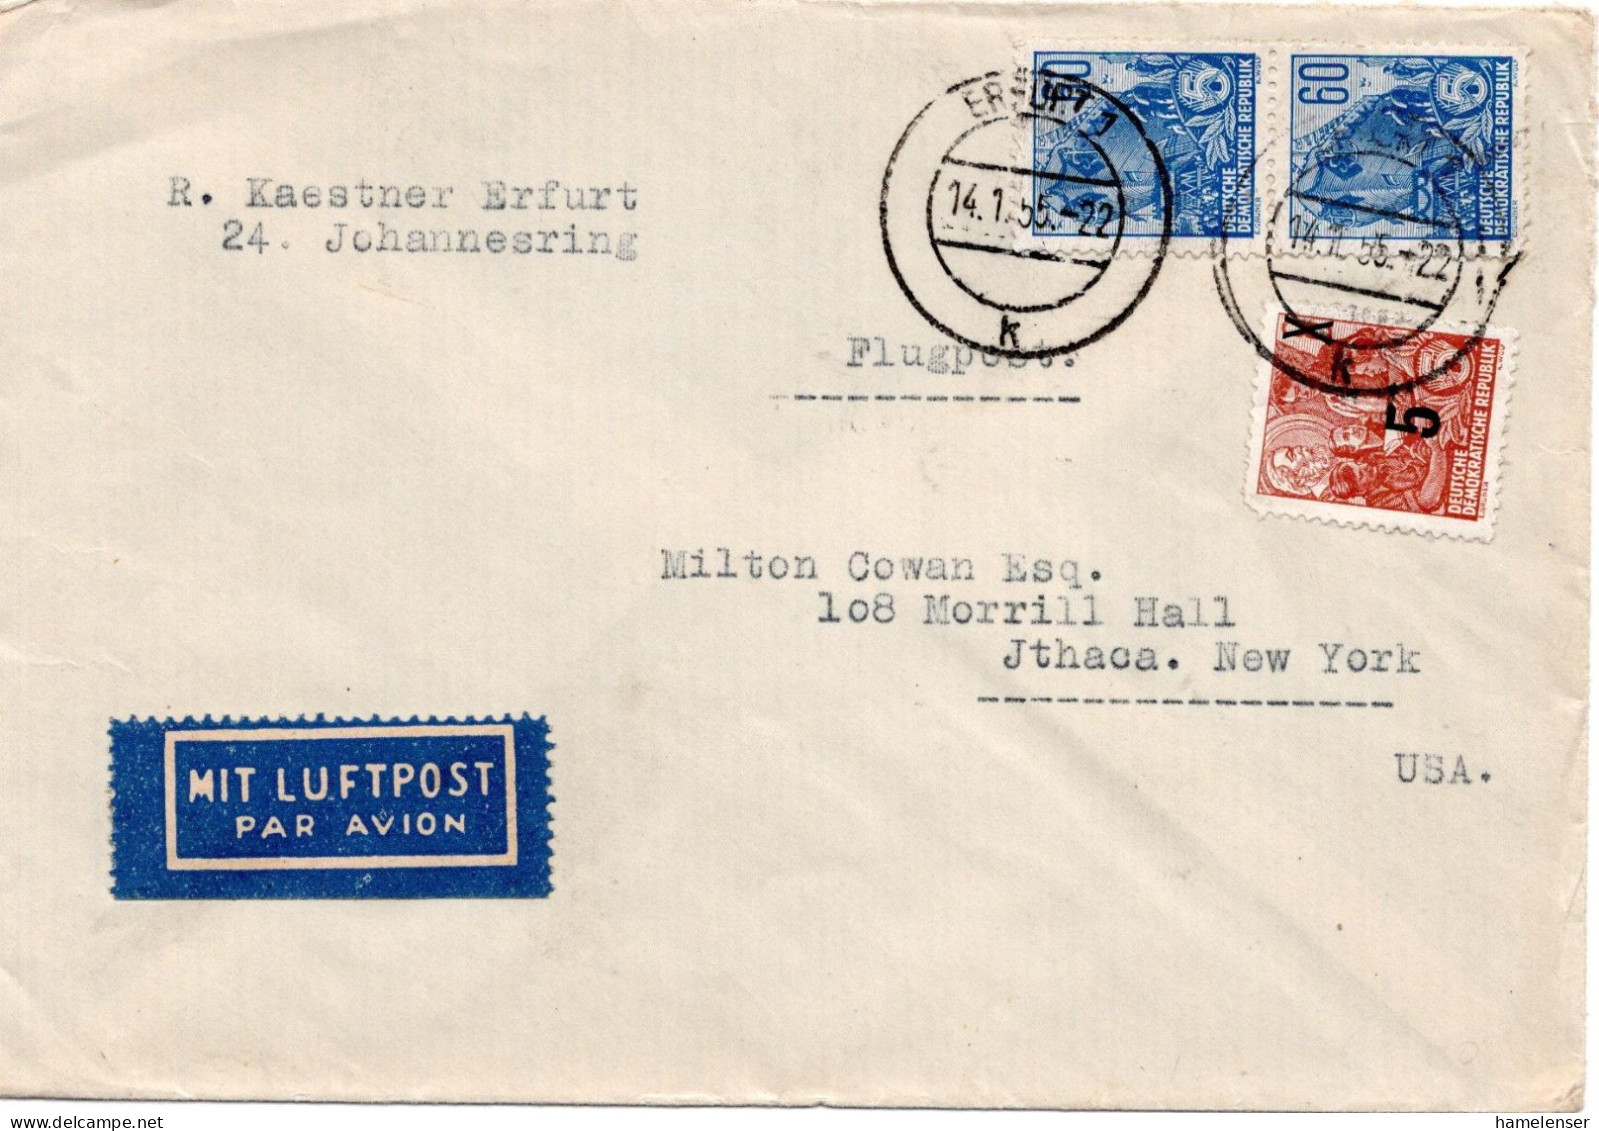 75071 - DDR - 1955 - 2@60Pfg Fuenfjahrplan MiF A LpBf ERFURT -> Ithaca, NY (USA) - Storia Postale